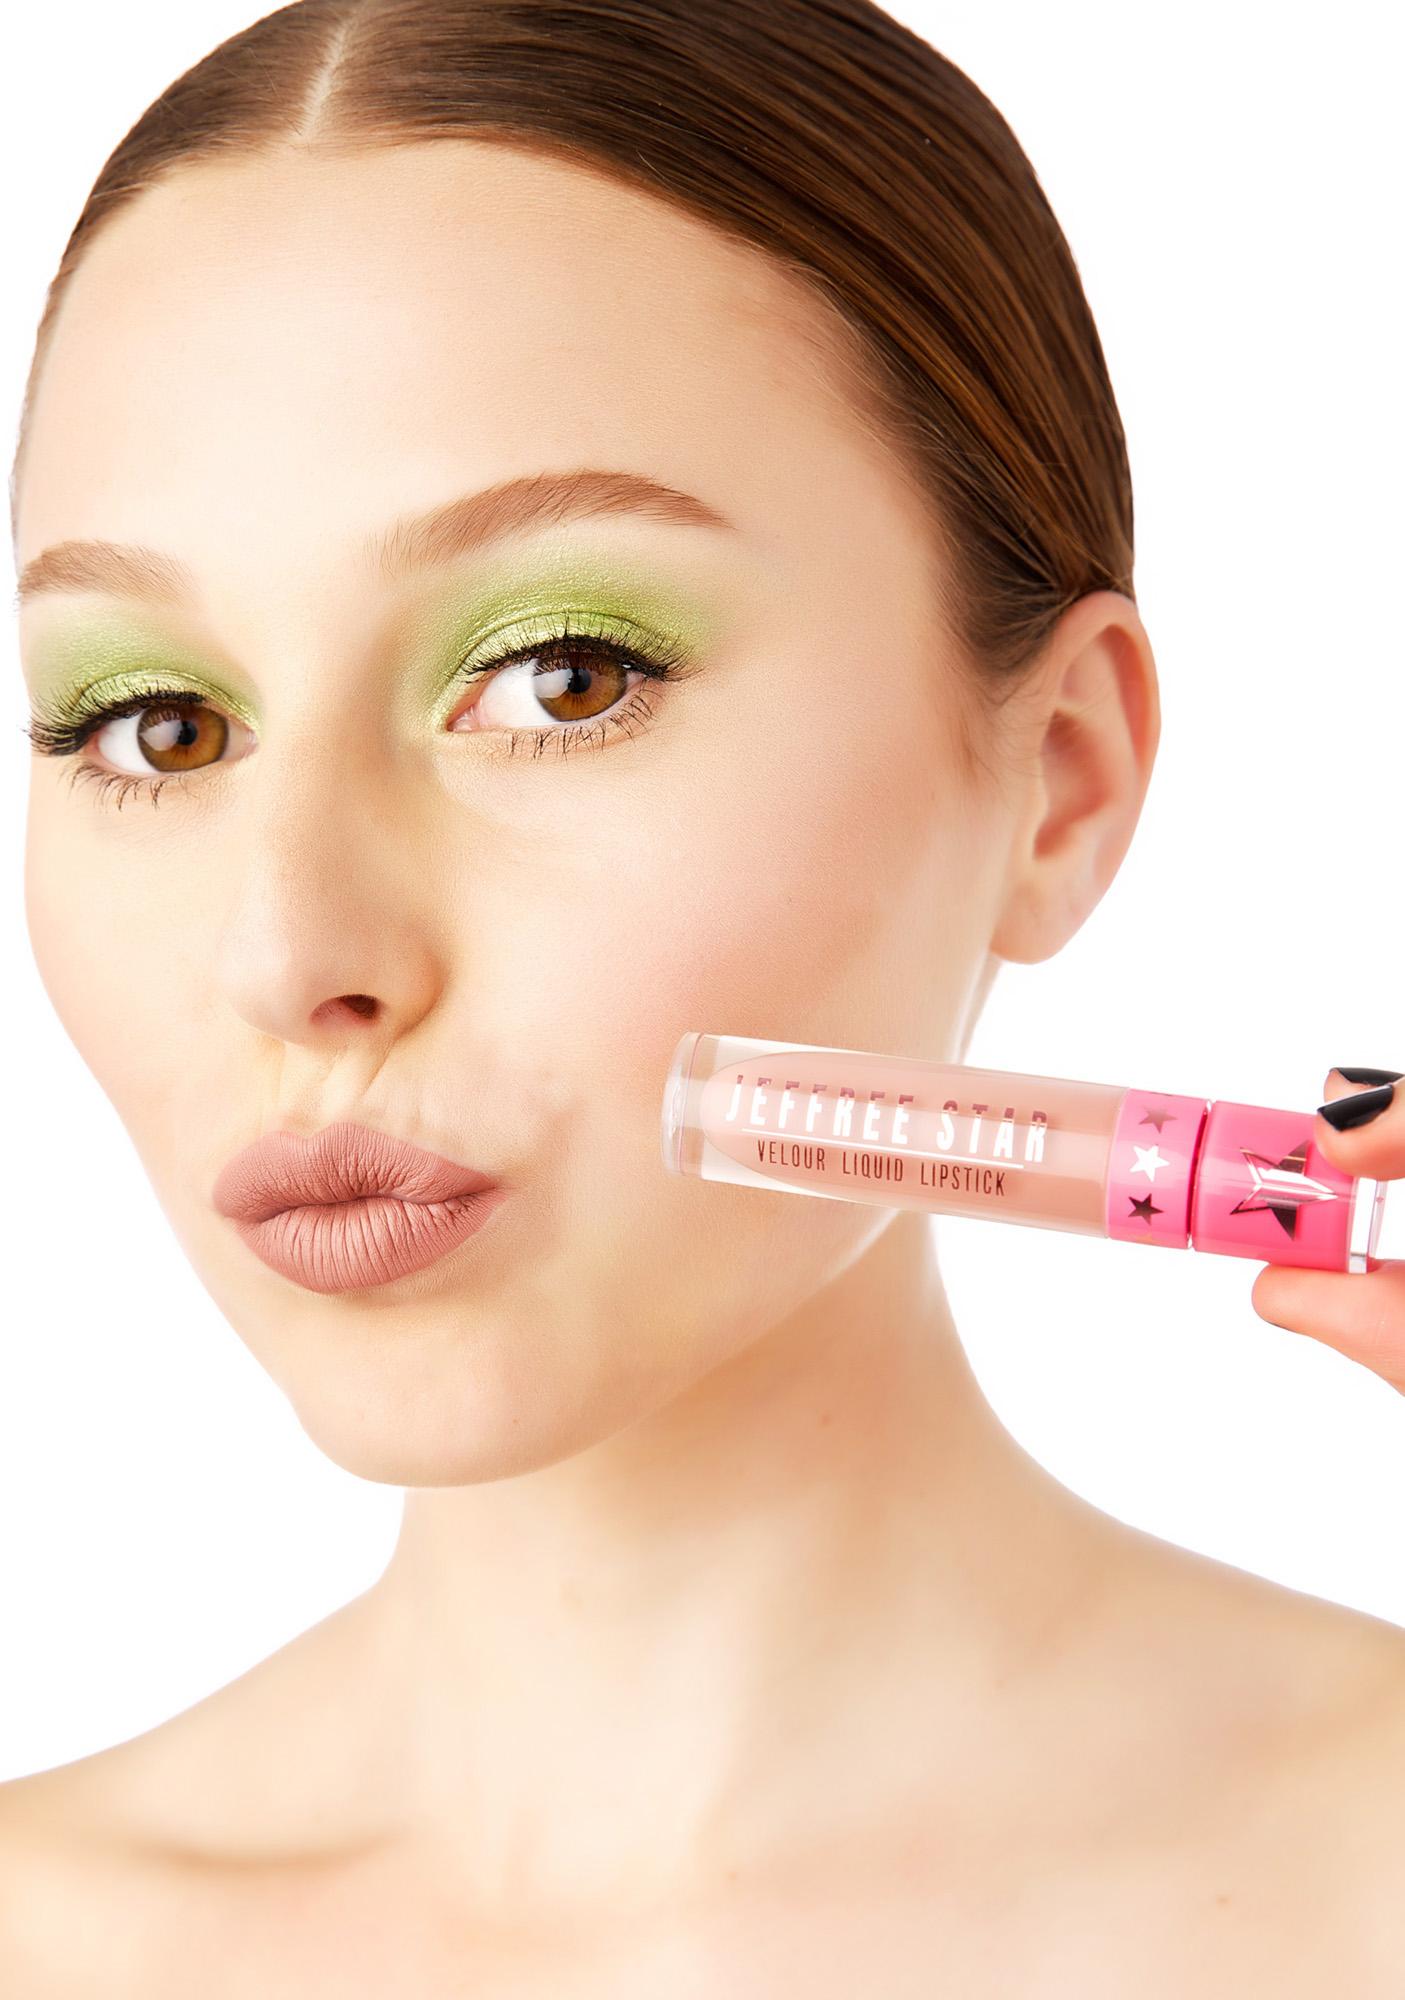 Jeffree Star Velour Liquid Lipsticks Review, Swatches 